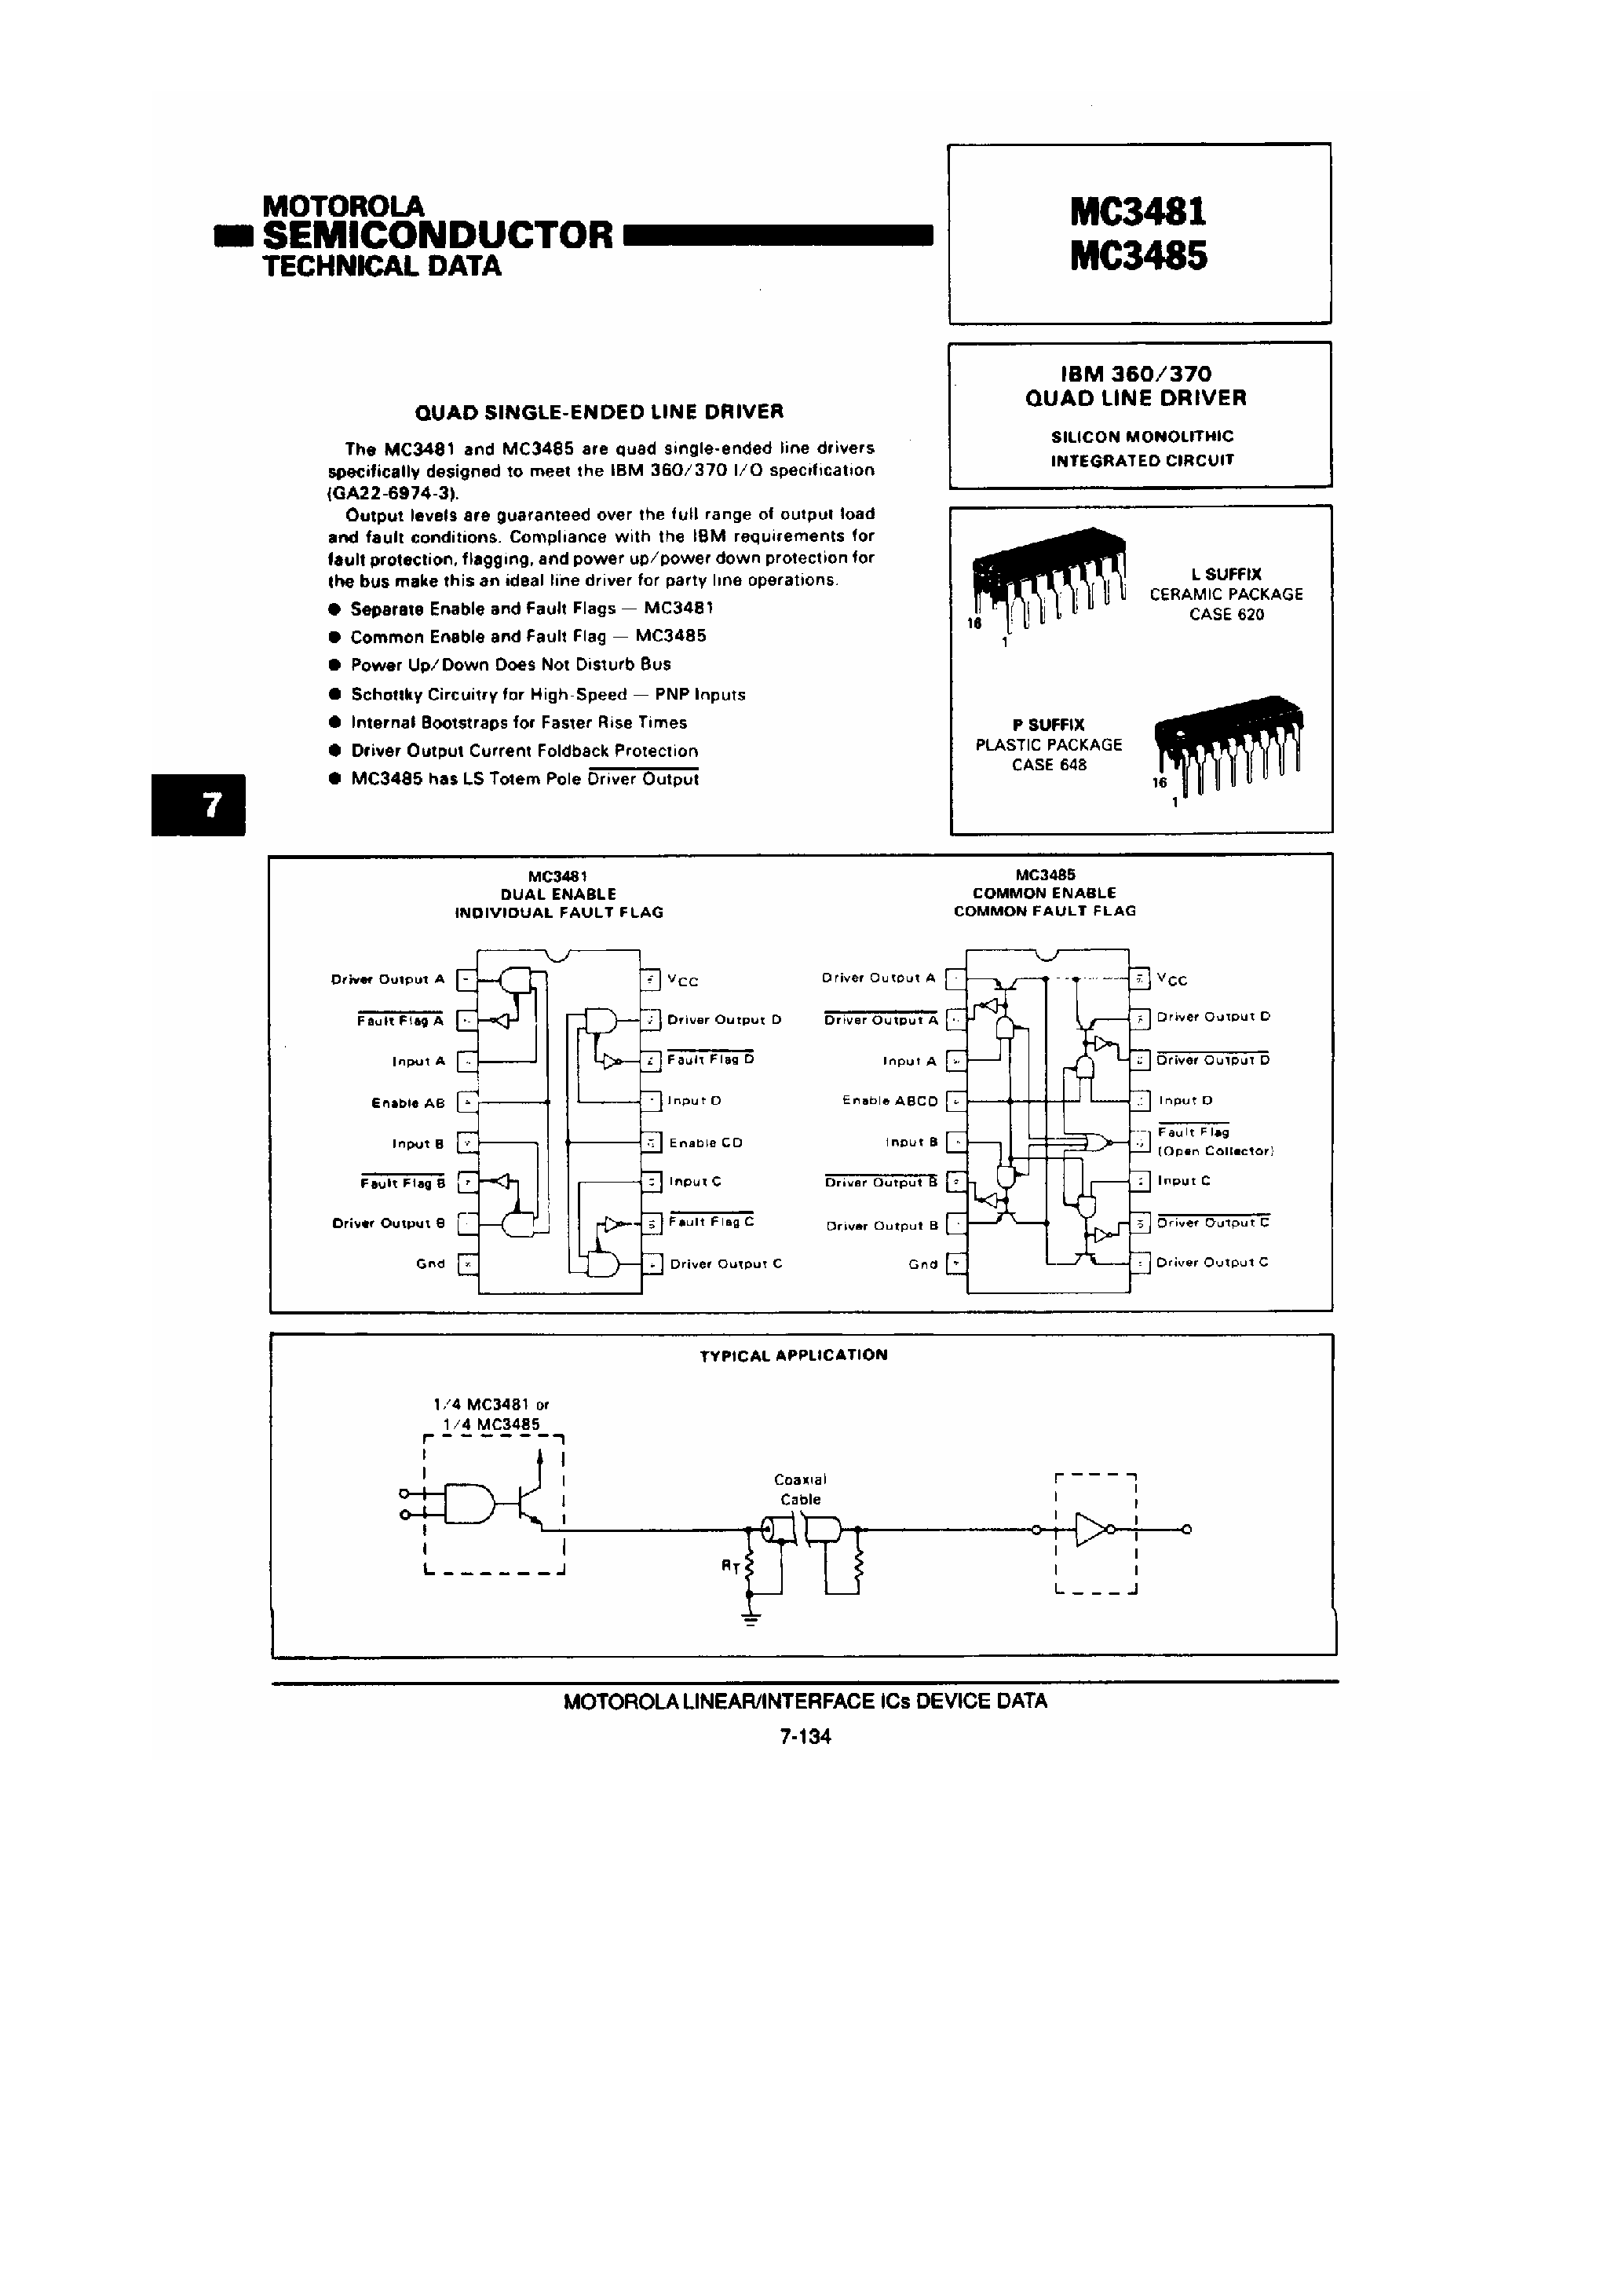 Datasheet MC3485 - (MC3481) QUAD SINGLE ENDED LINE DRIVER page 1